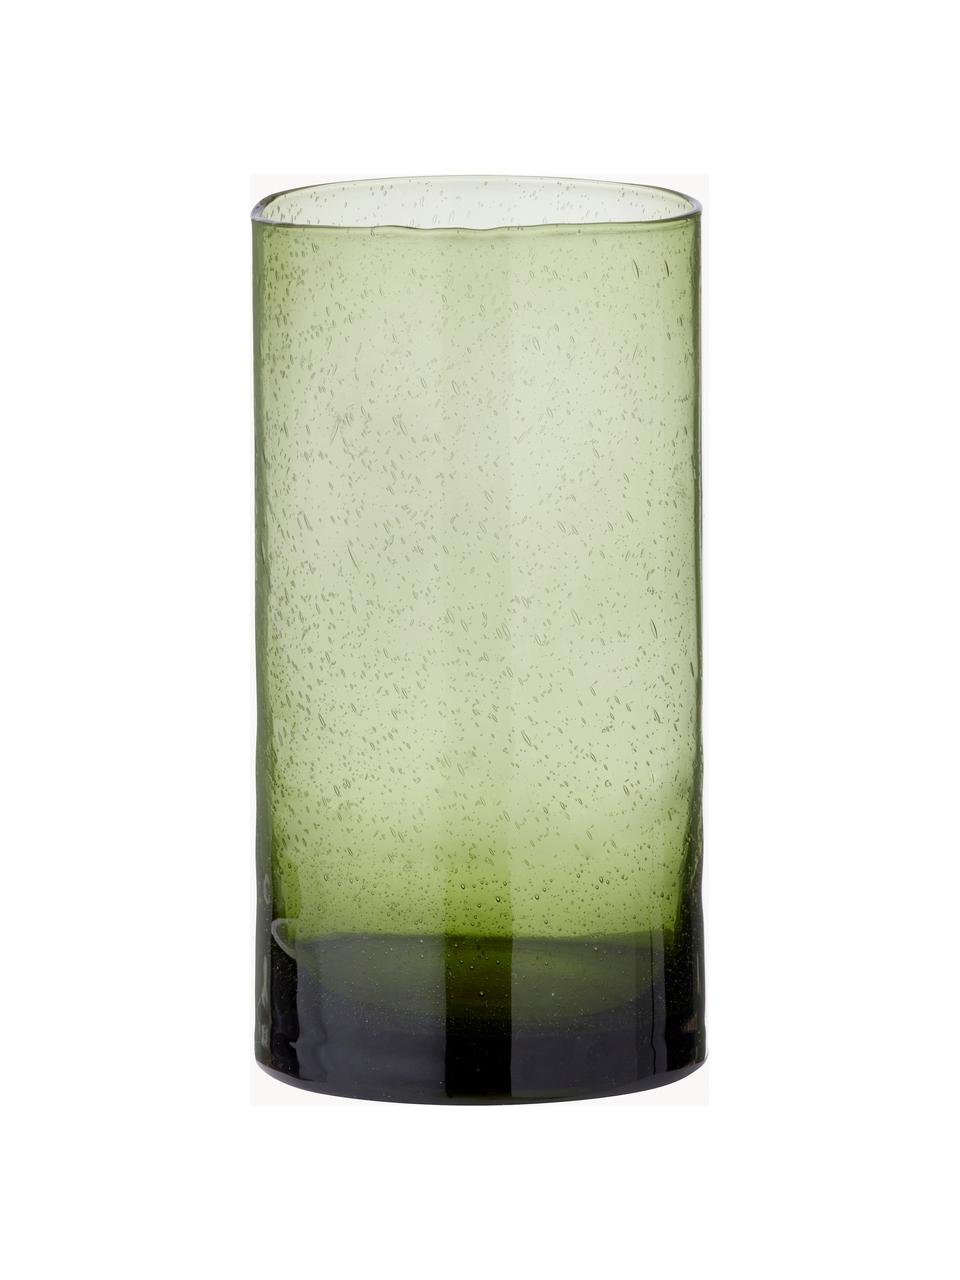 Jarrón de vidrio Salon, 21 cm, Vidrio, Tonos verdes semitransparente, Ø 11 x Al 21 cm